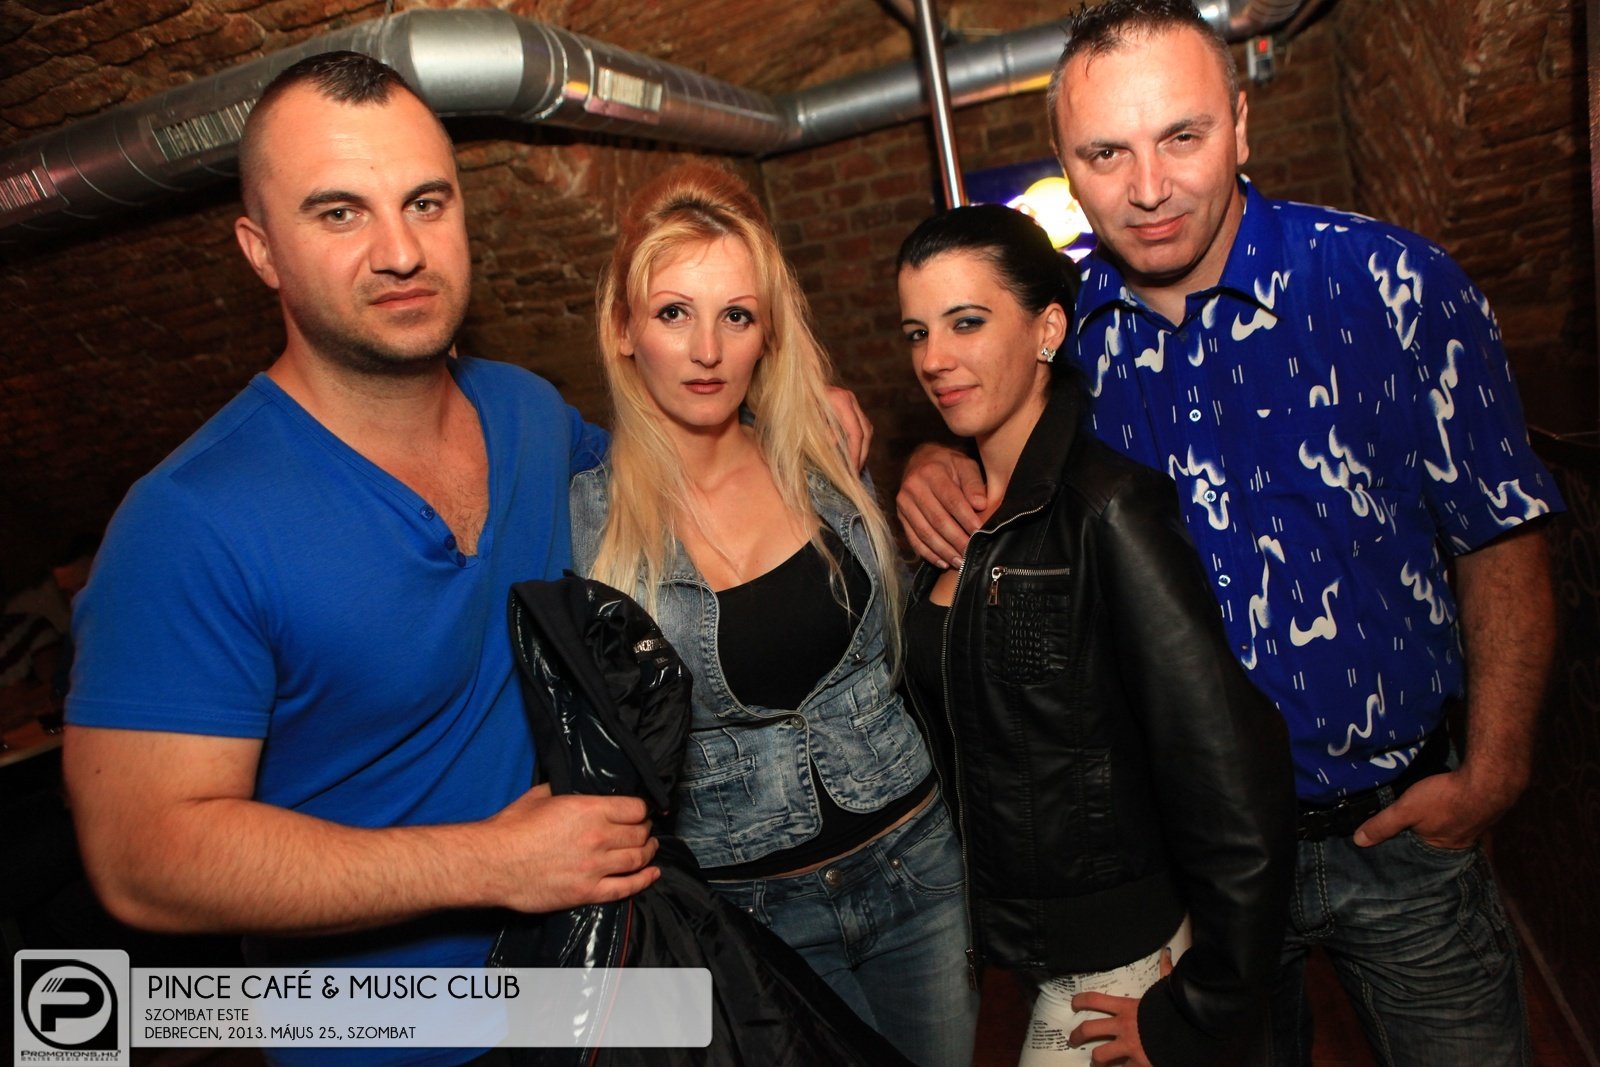 Debrecen, Pince Café & Music Club - 2013. Május 25., Szombat